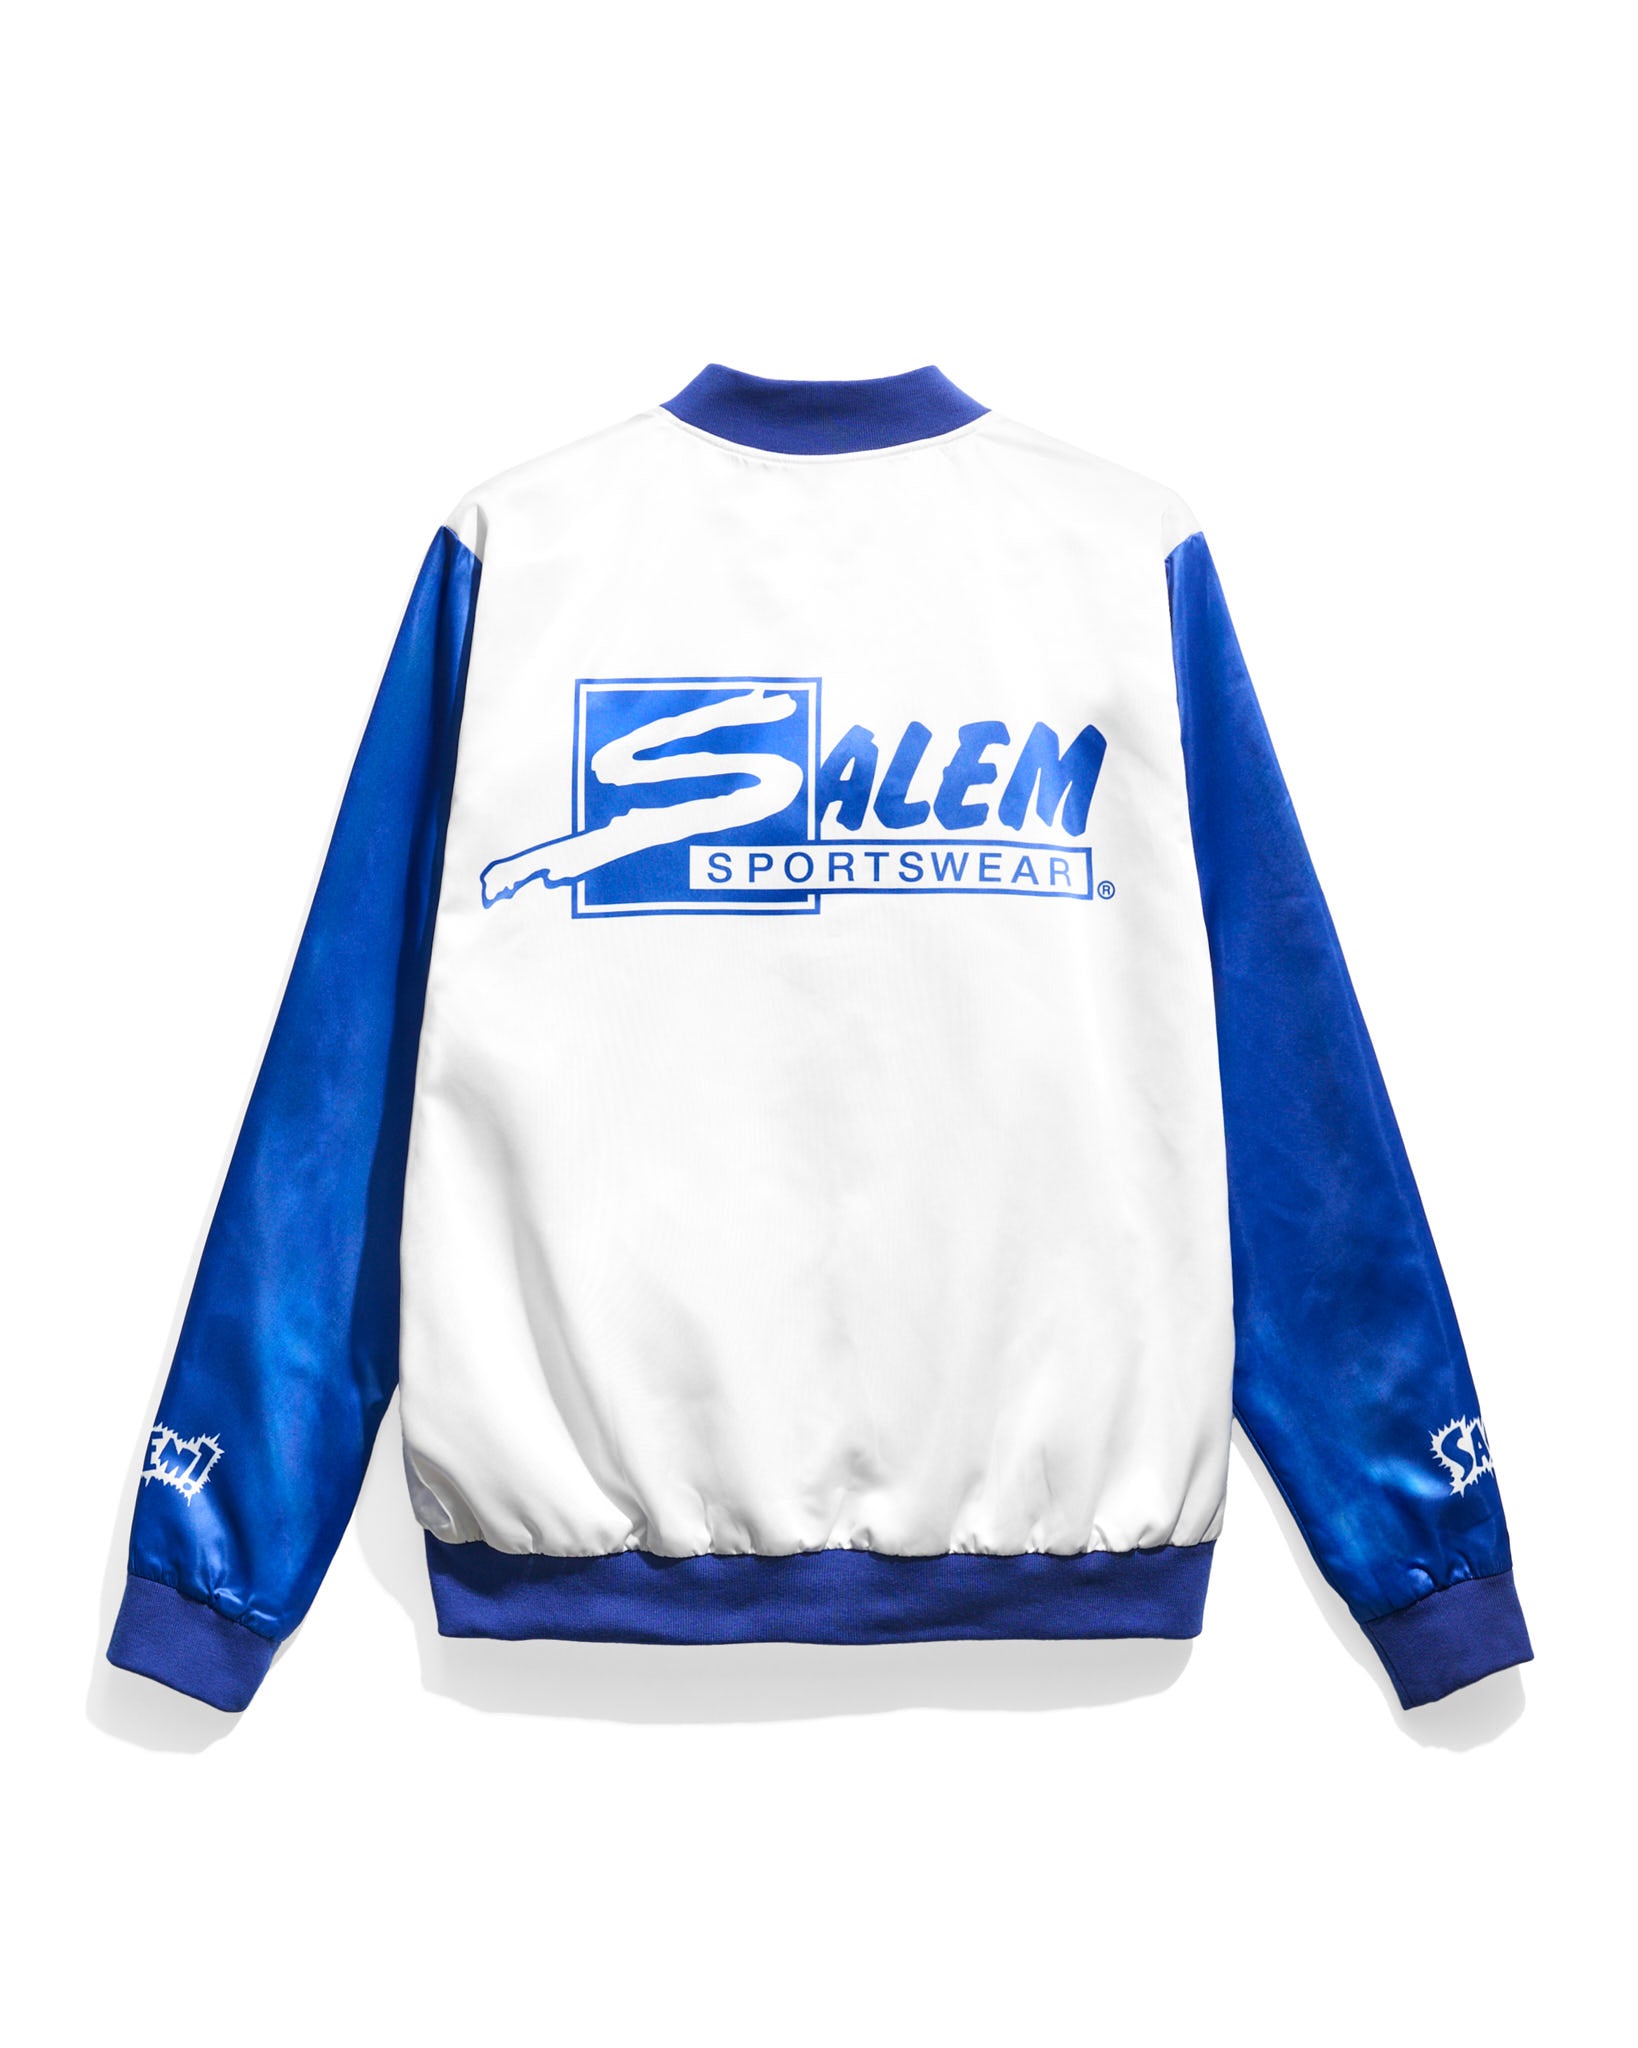 Salem Sportswear Satin Jacket